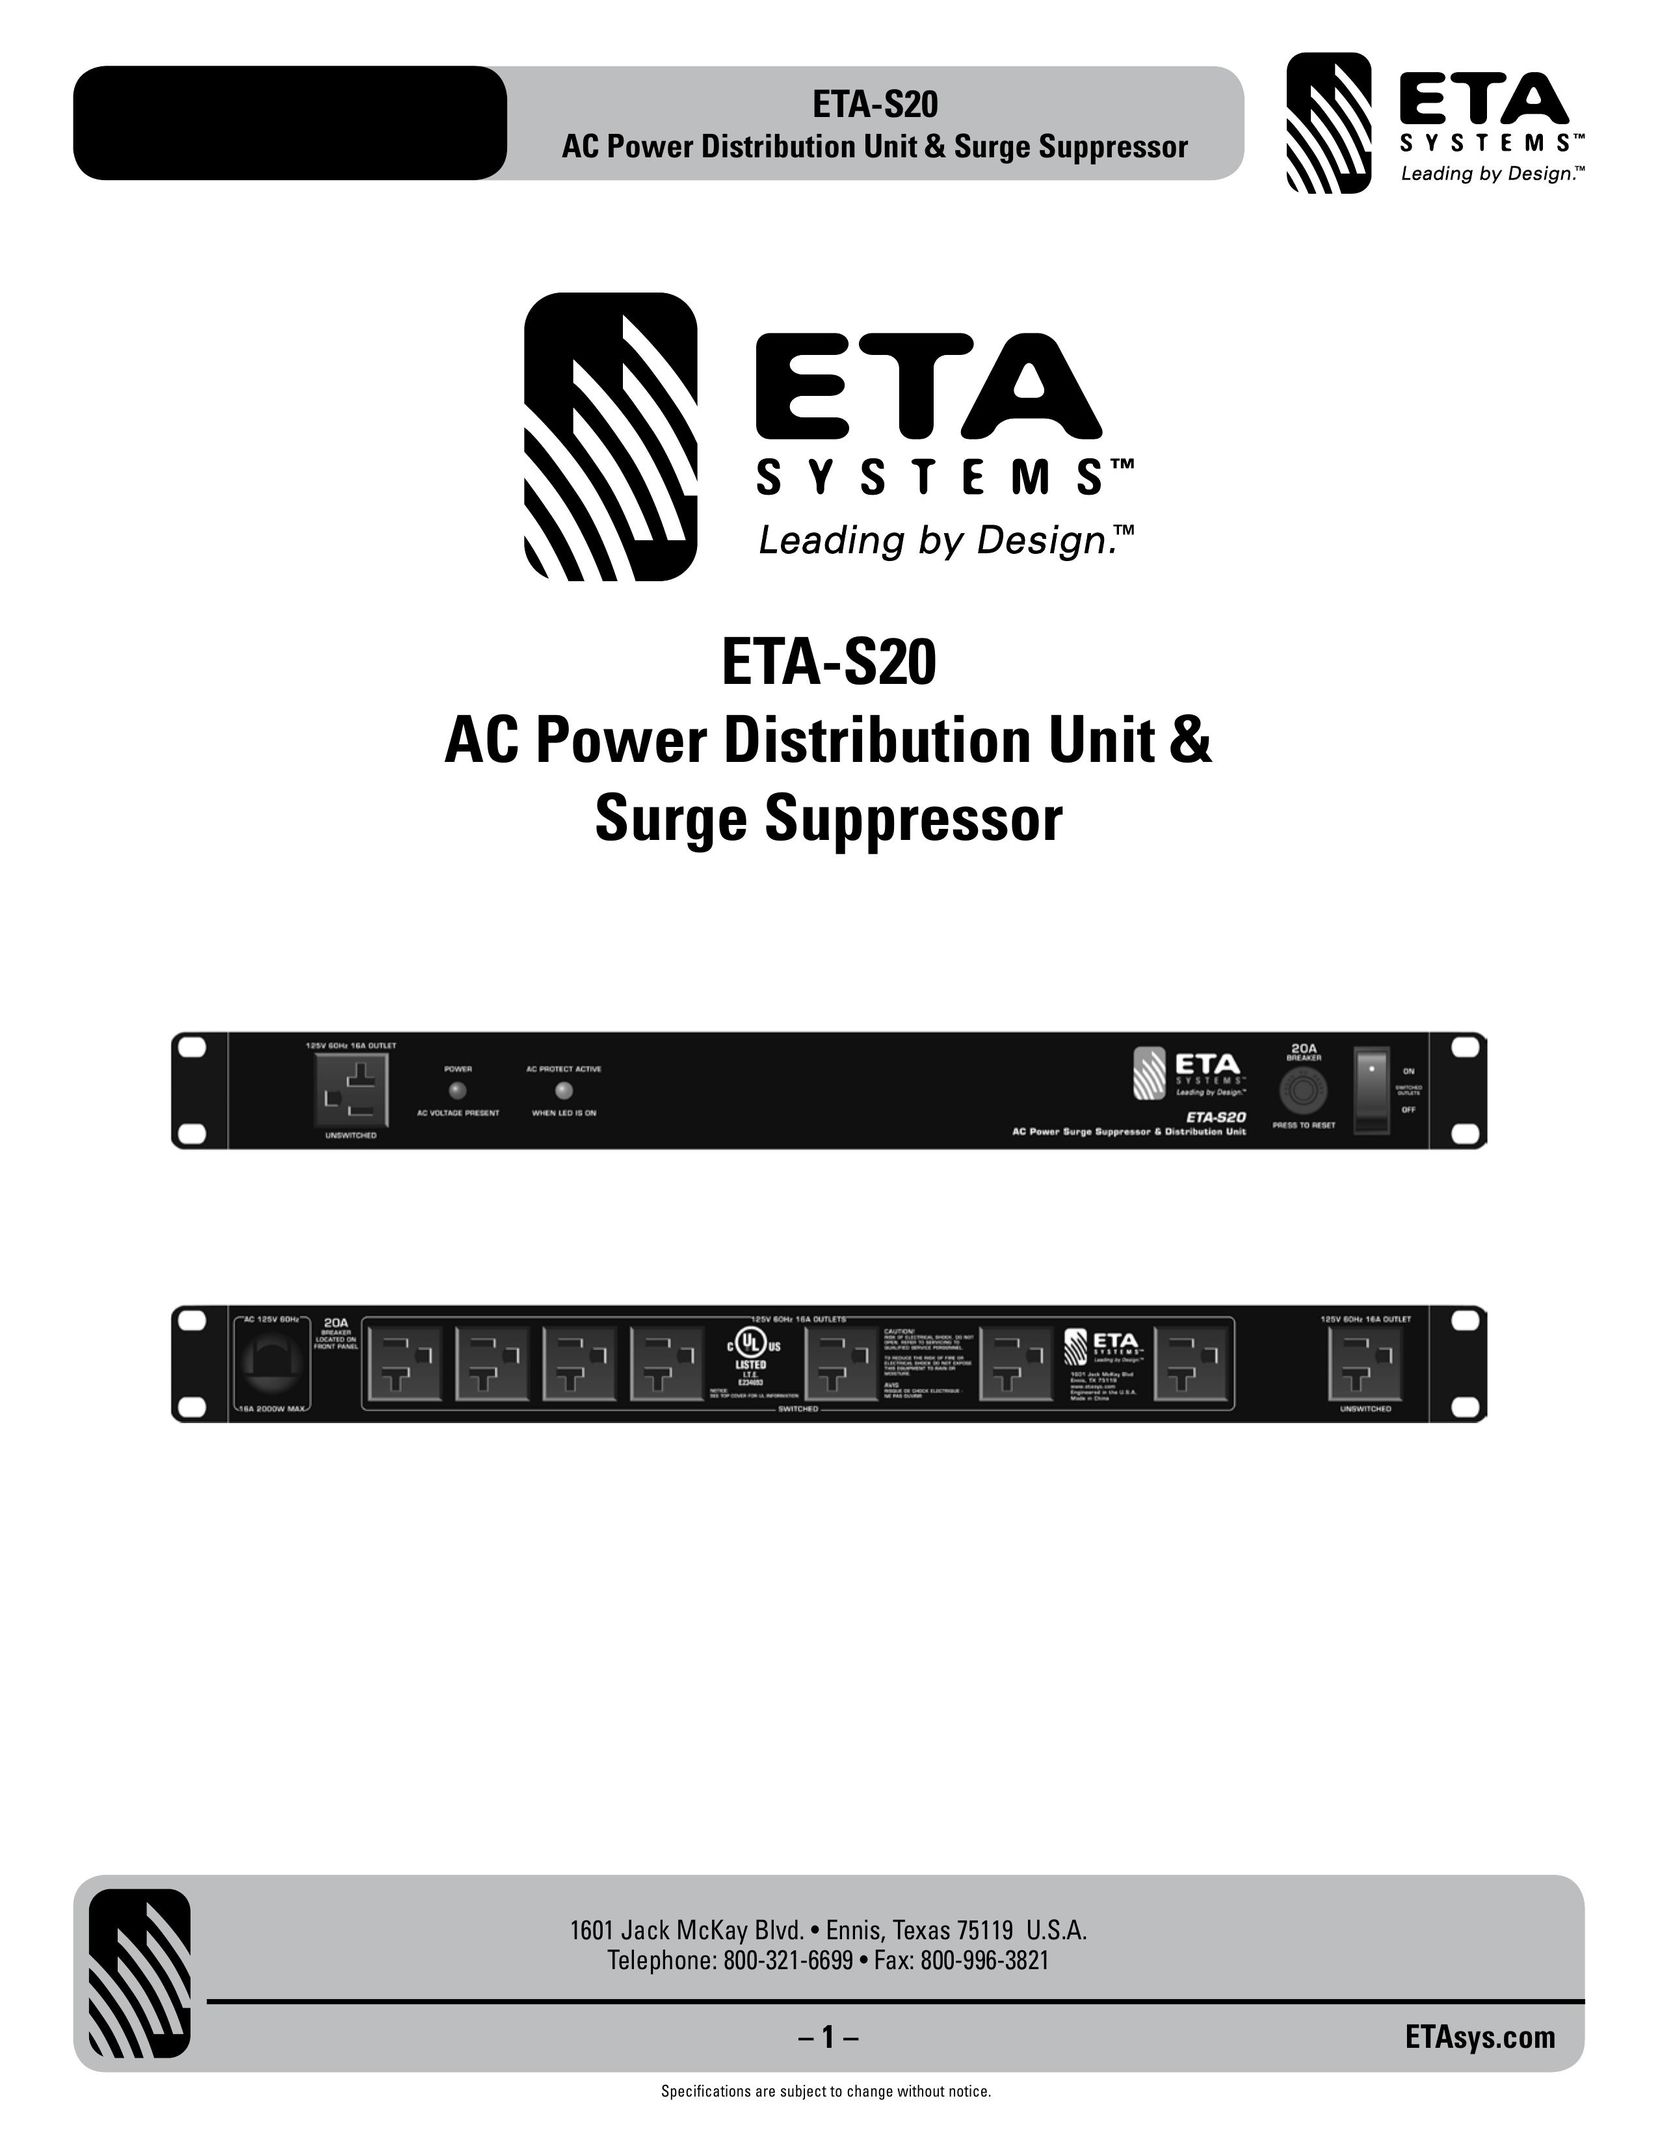 ETA Systems ETA-S20 Surge Protector User Manual